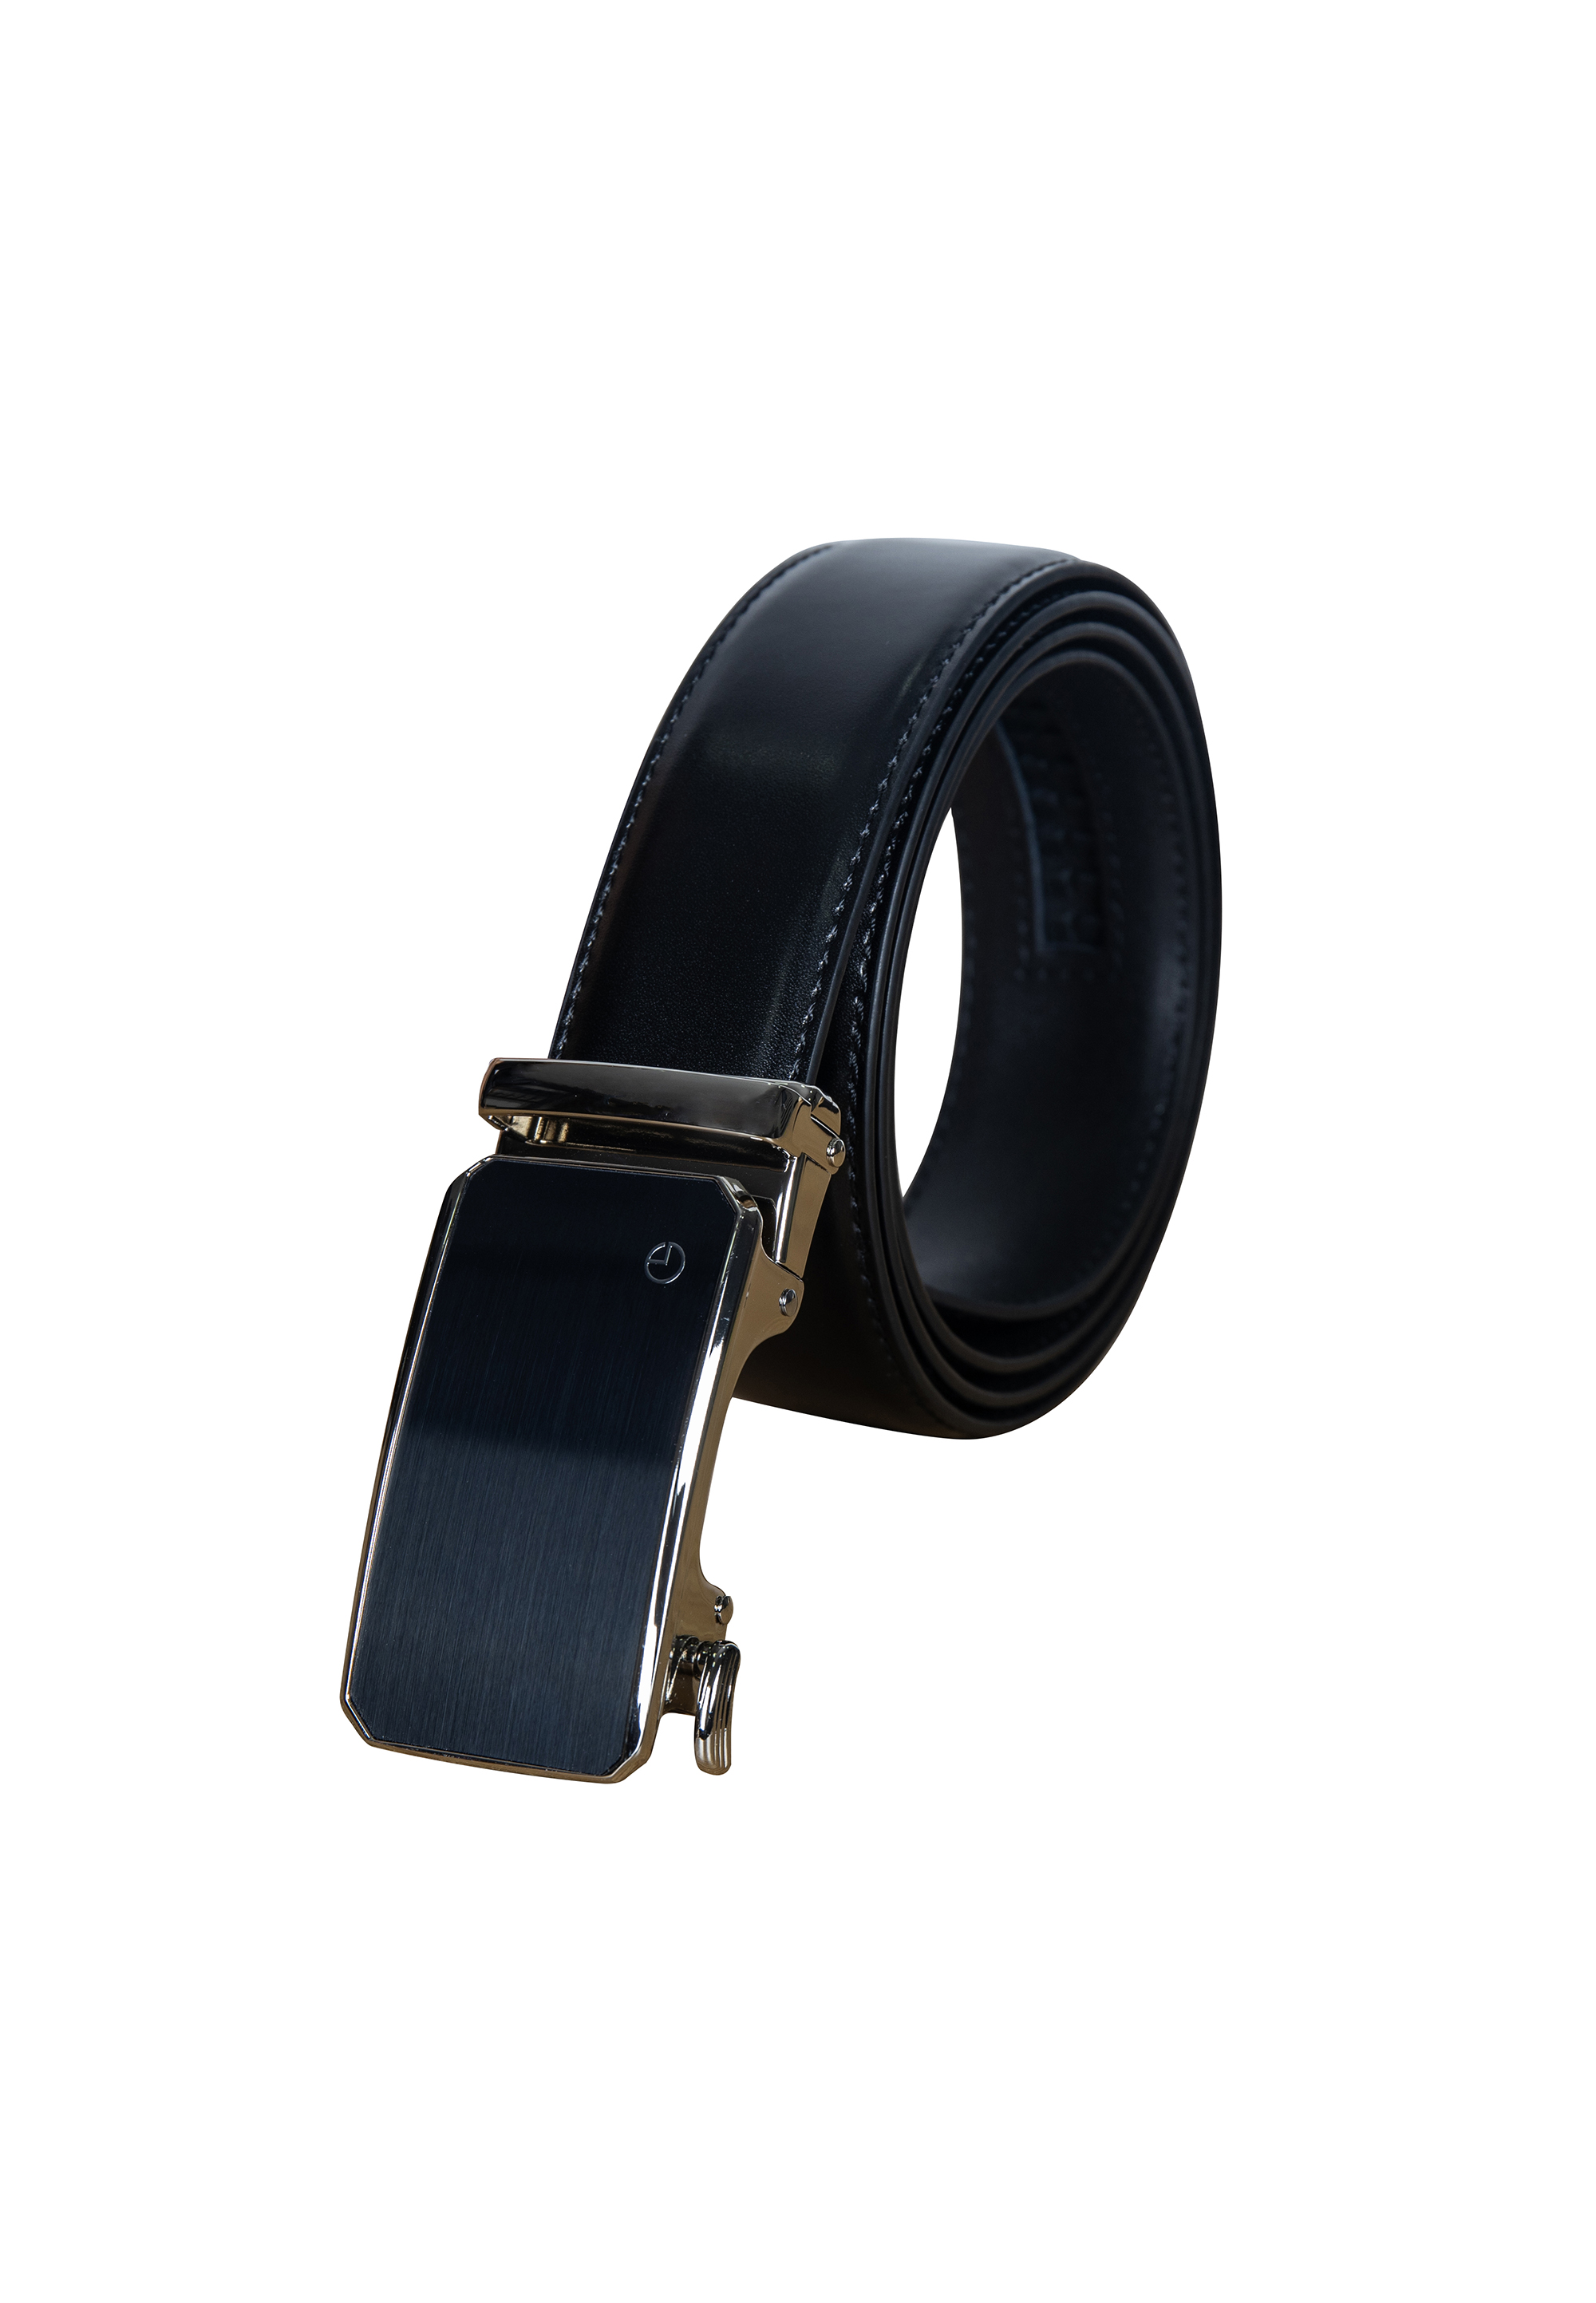 Goldlion Men Leather Auto Lock Buckle Belt - Black